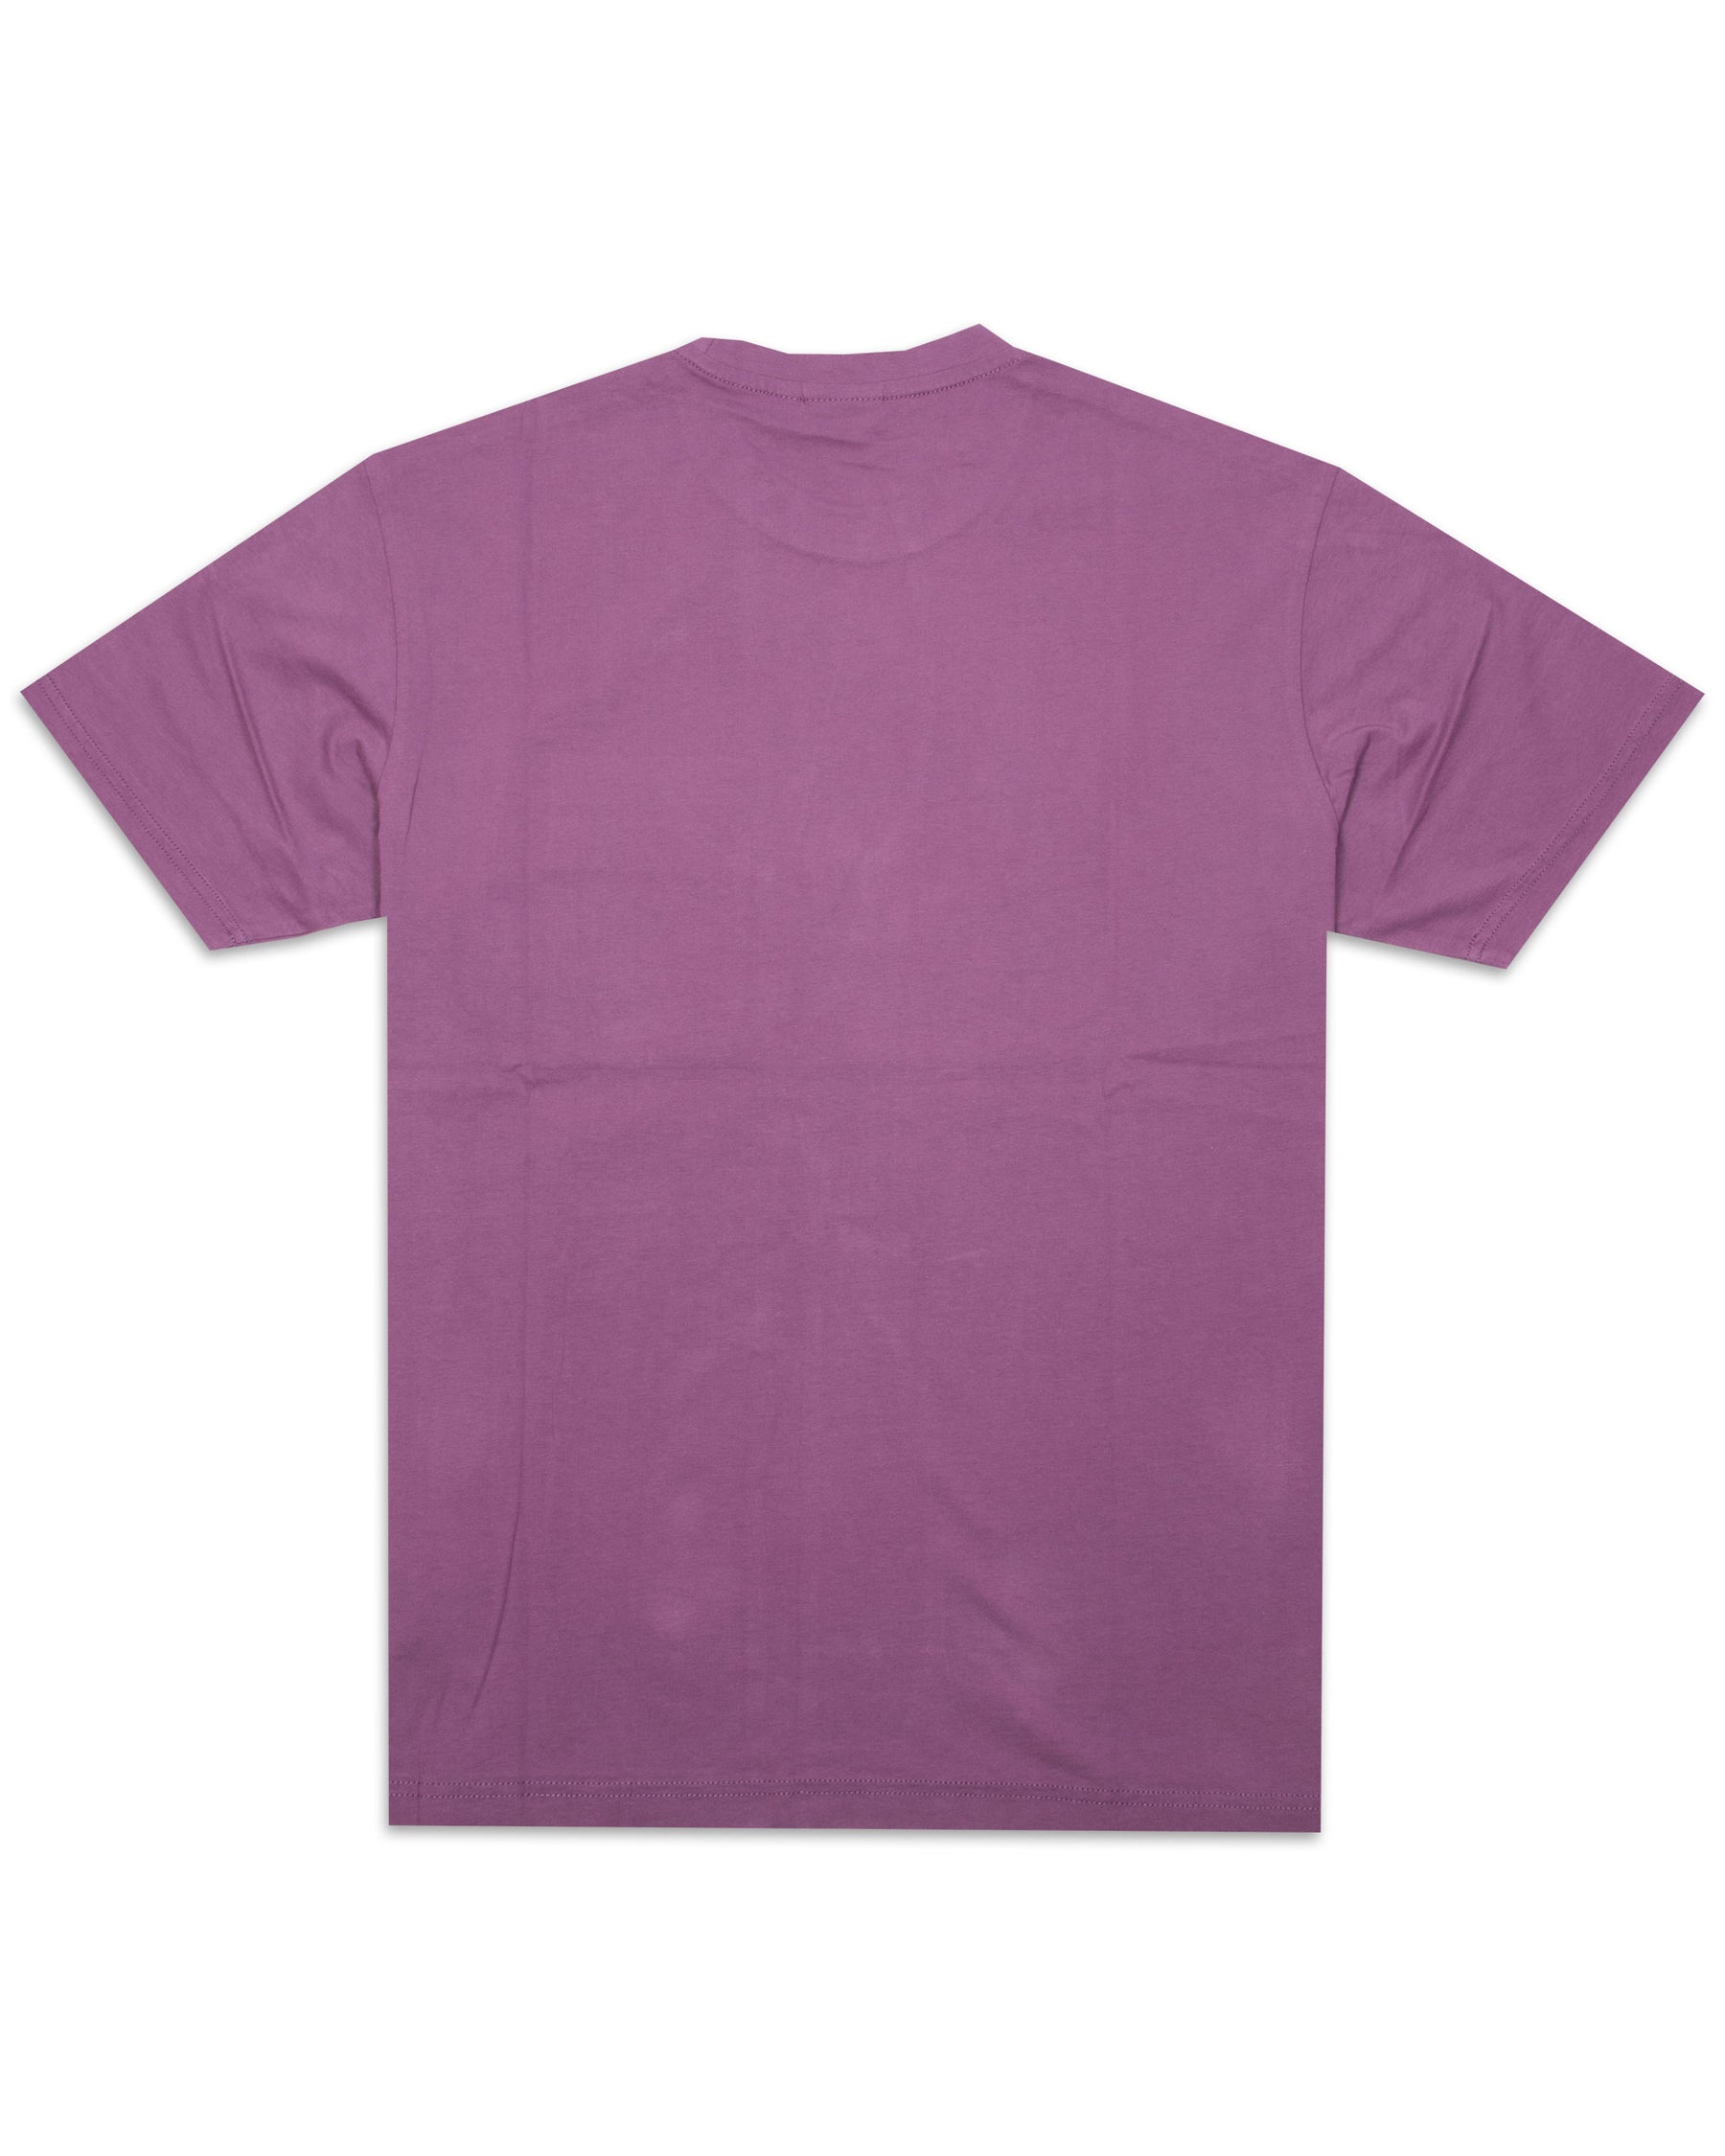 T-Shirt Uomo Napapijri S-Morgex Pocket Viola